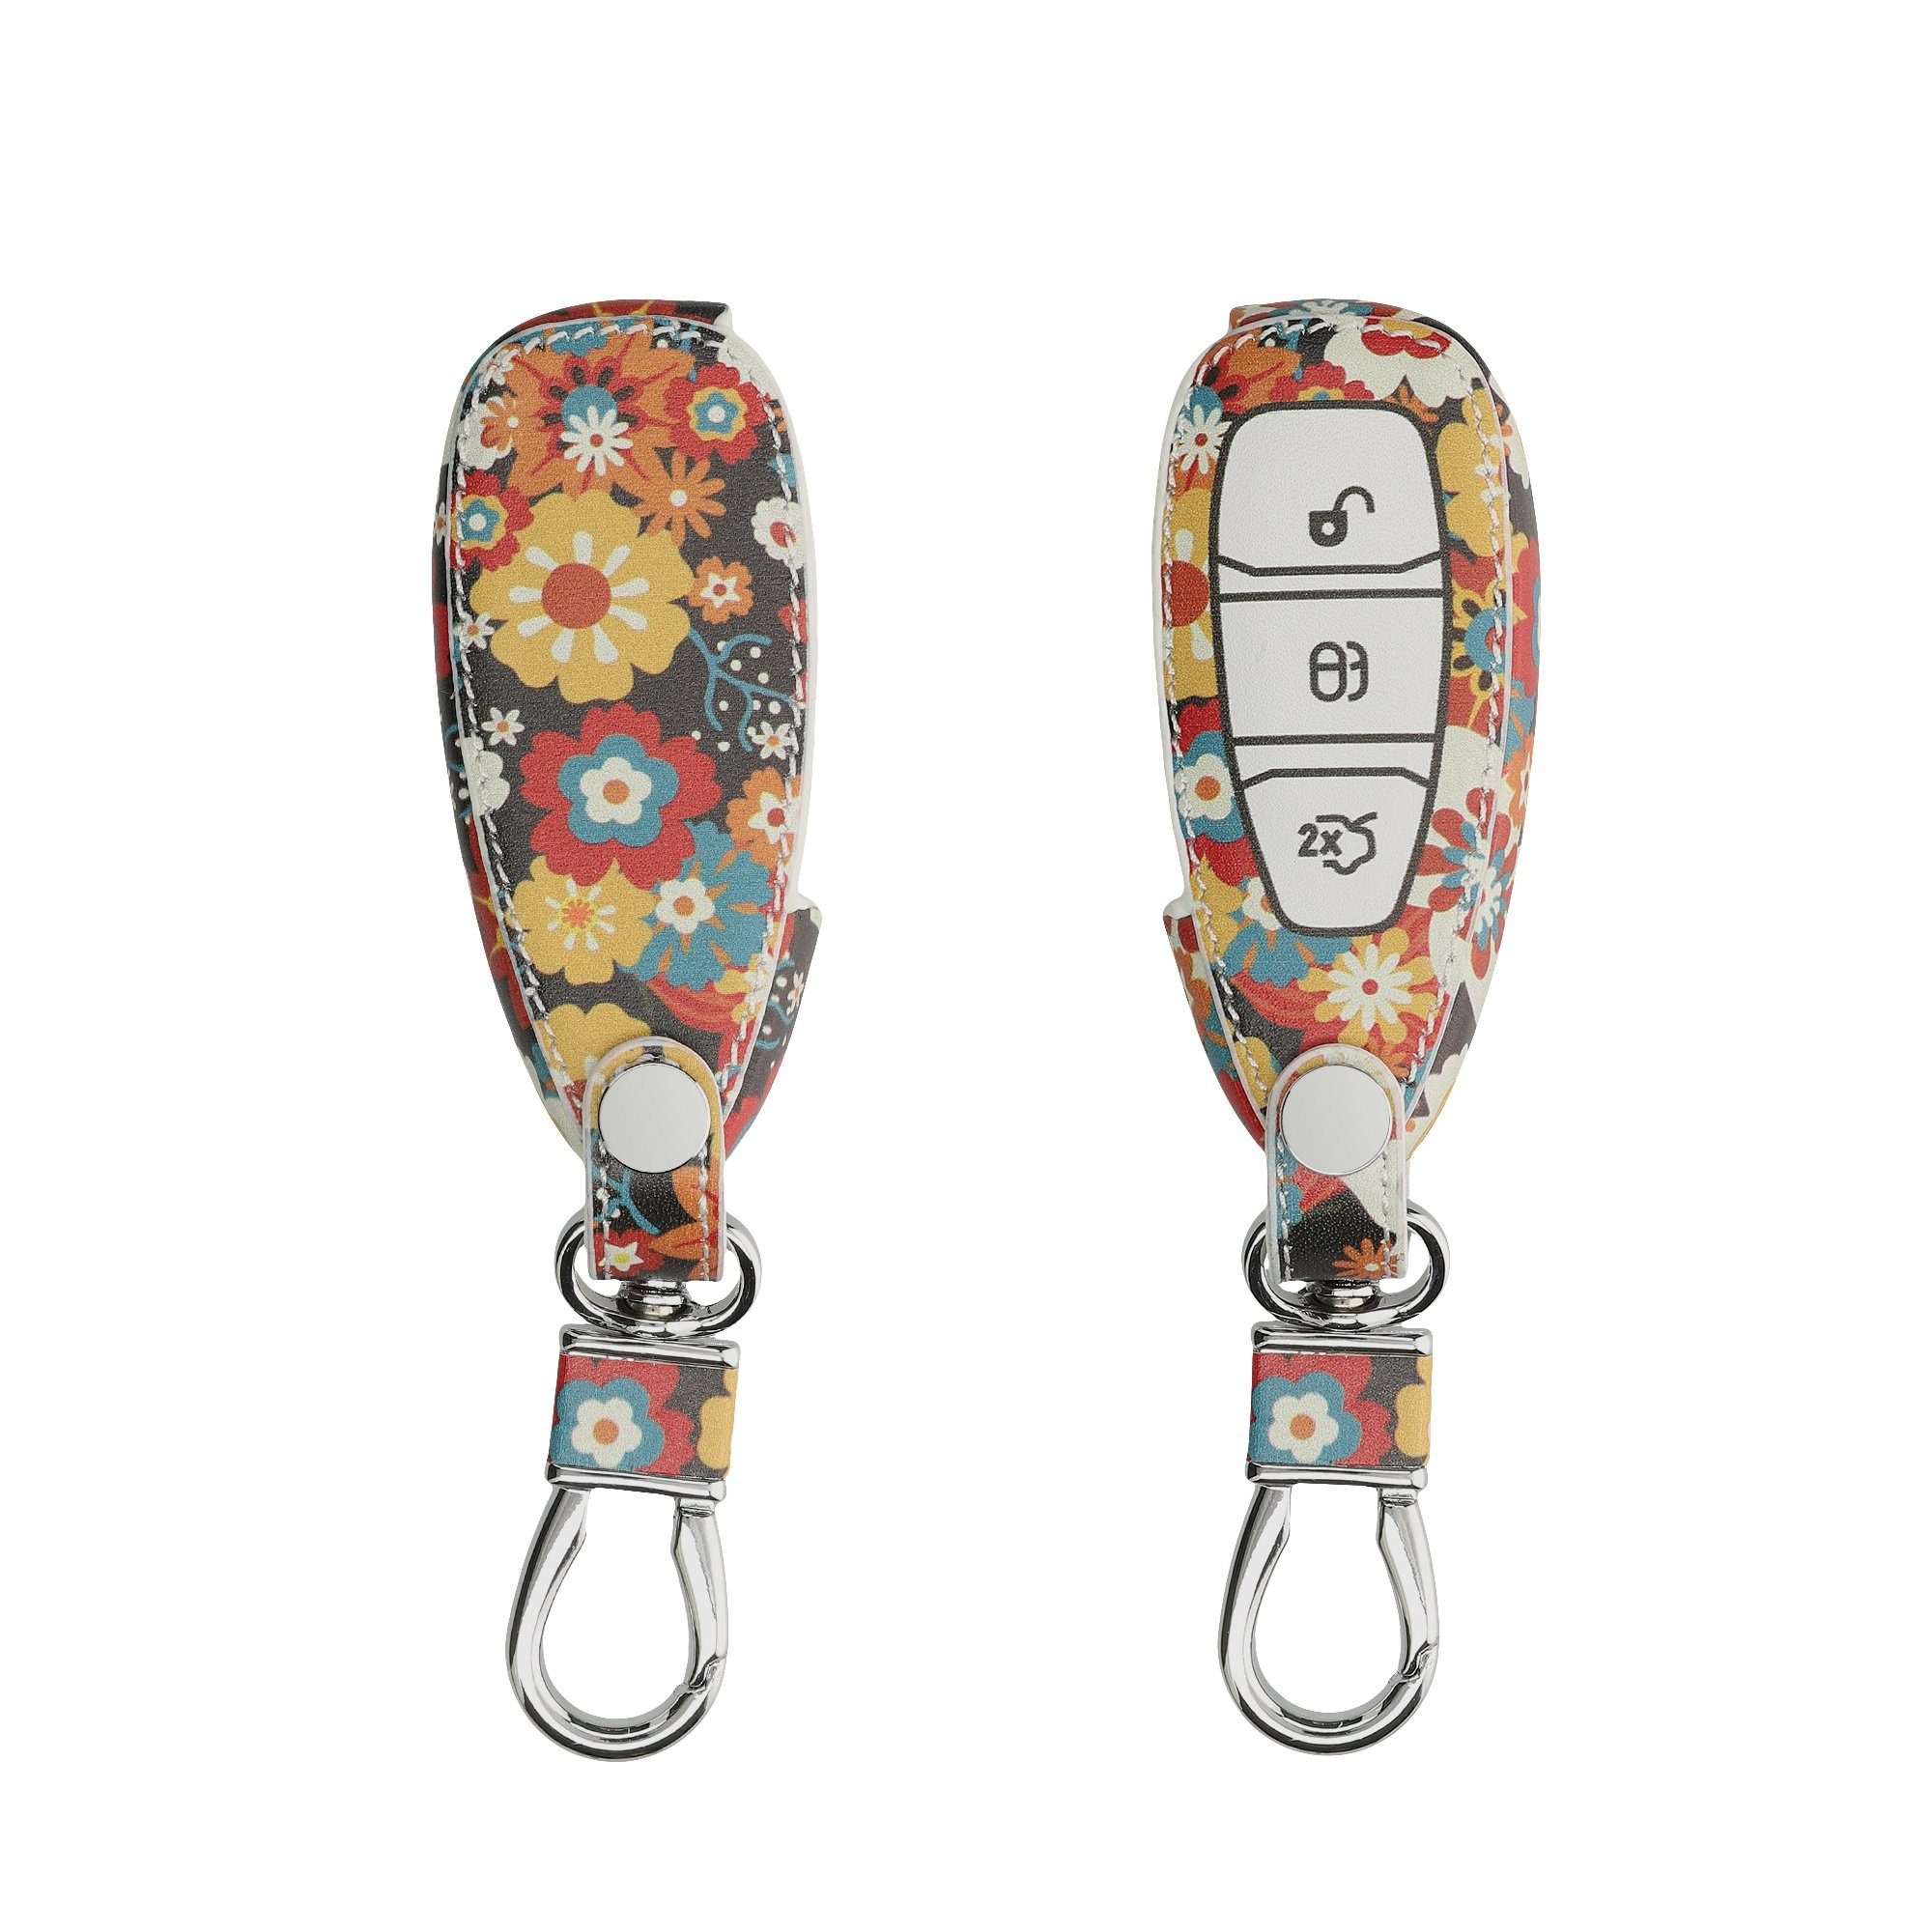 Autoschlüssel Schutzhülle Cover Ford Schlüsseltasche Schlüsselhülle Hülle, für Ford Kunstleder kwmobile